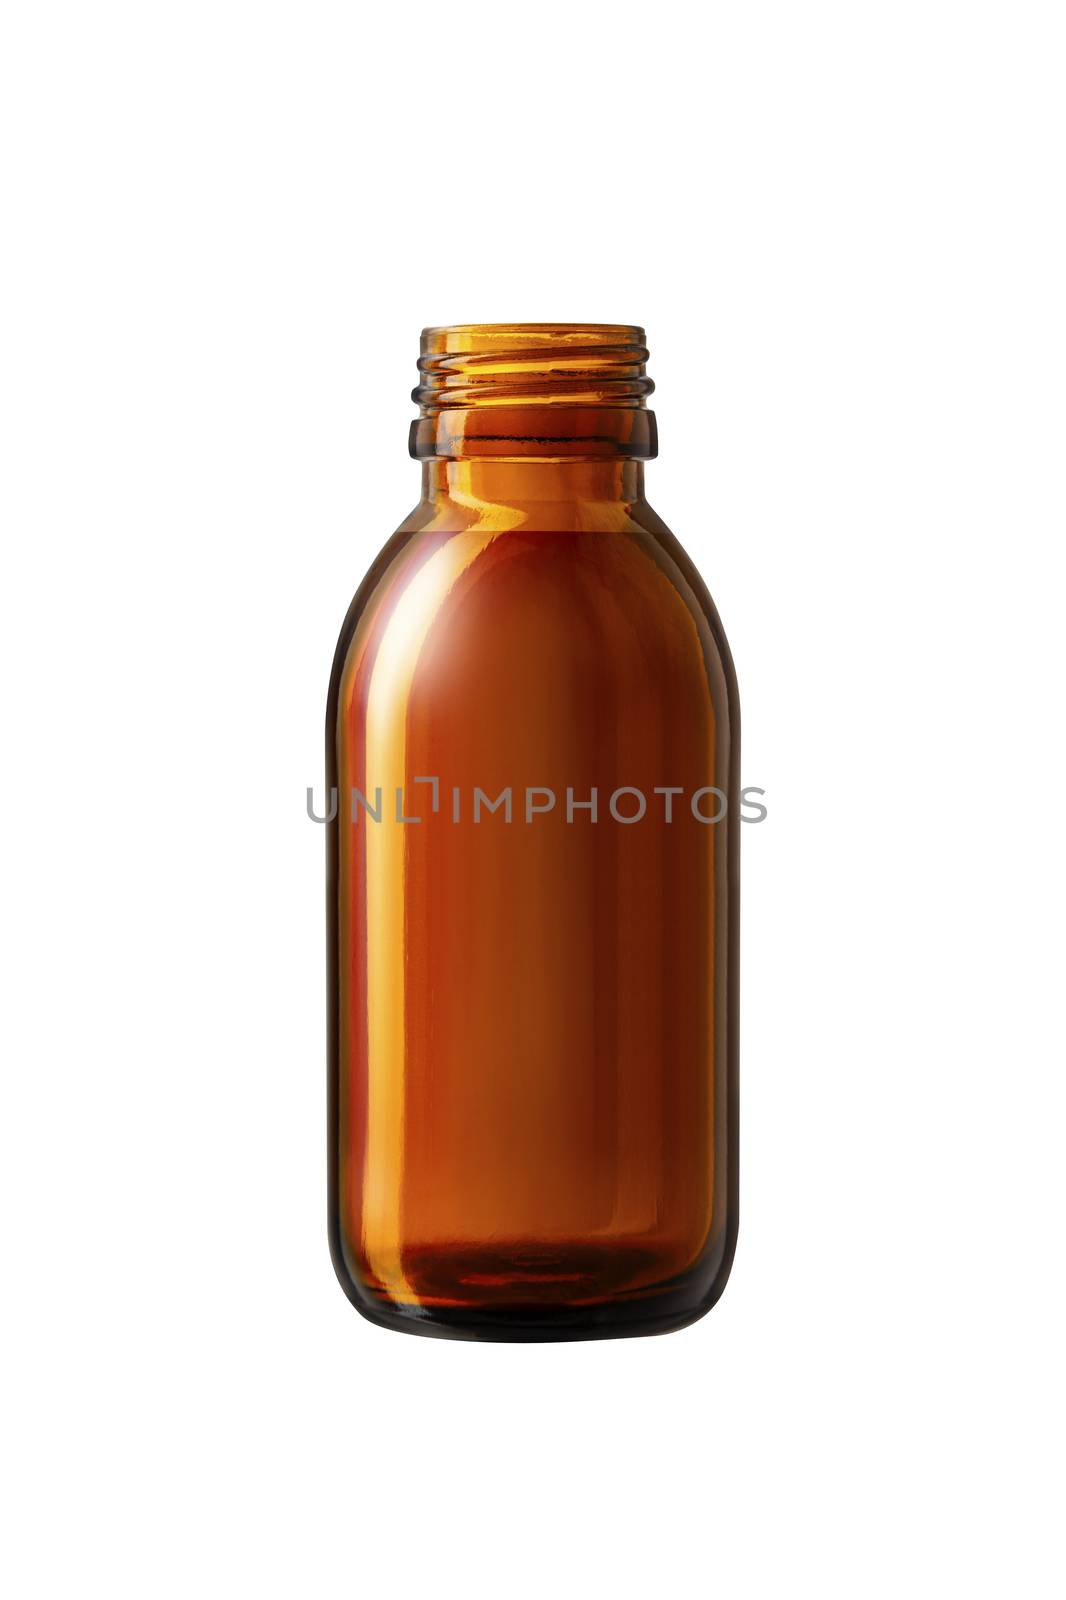 Open medicine bottle close up isolated on white background